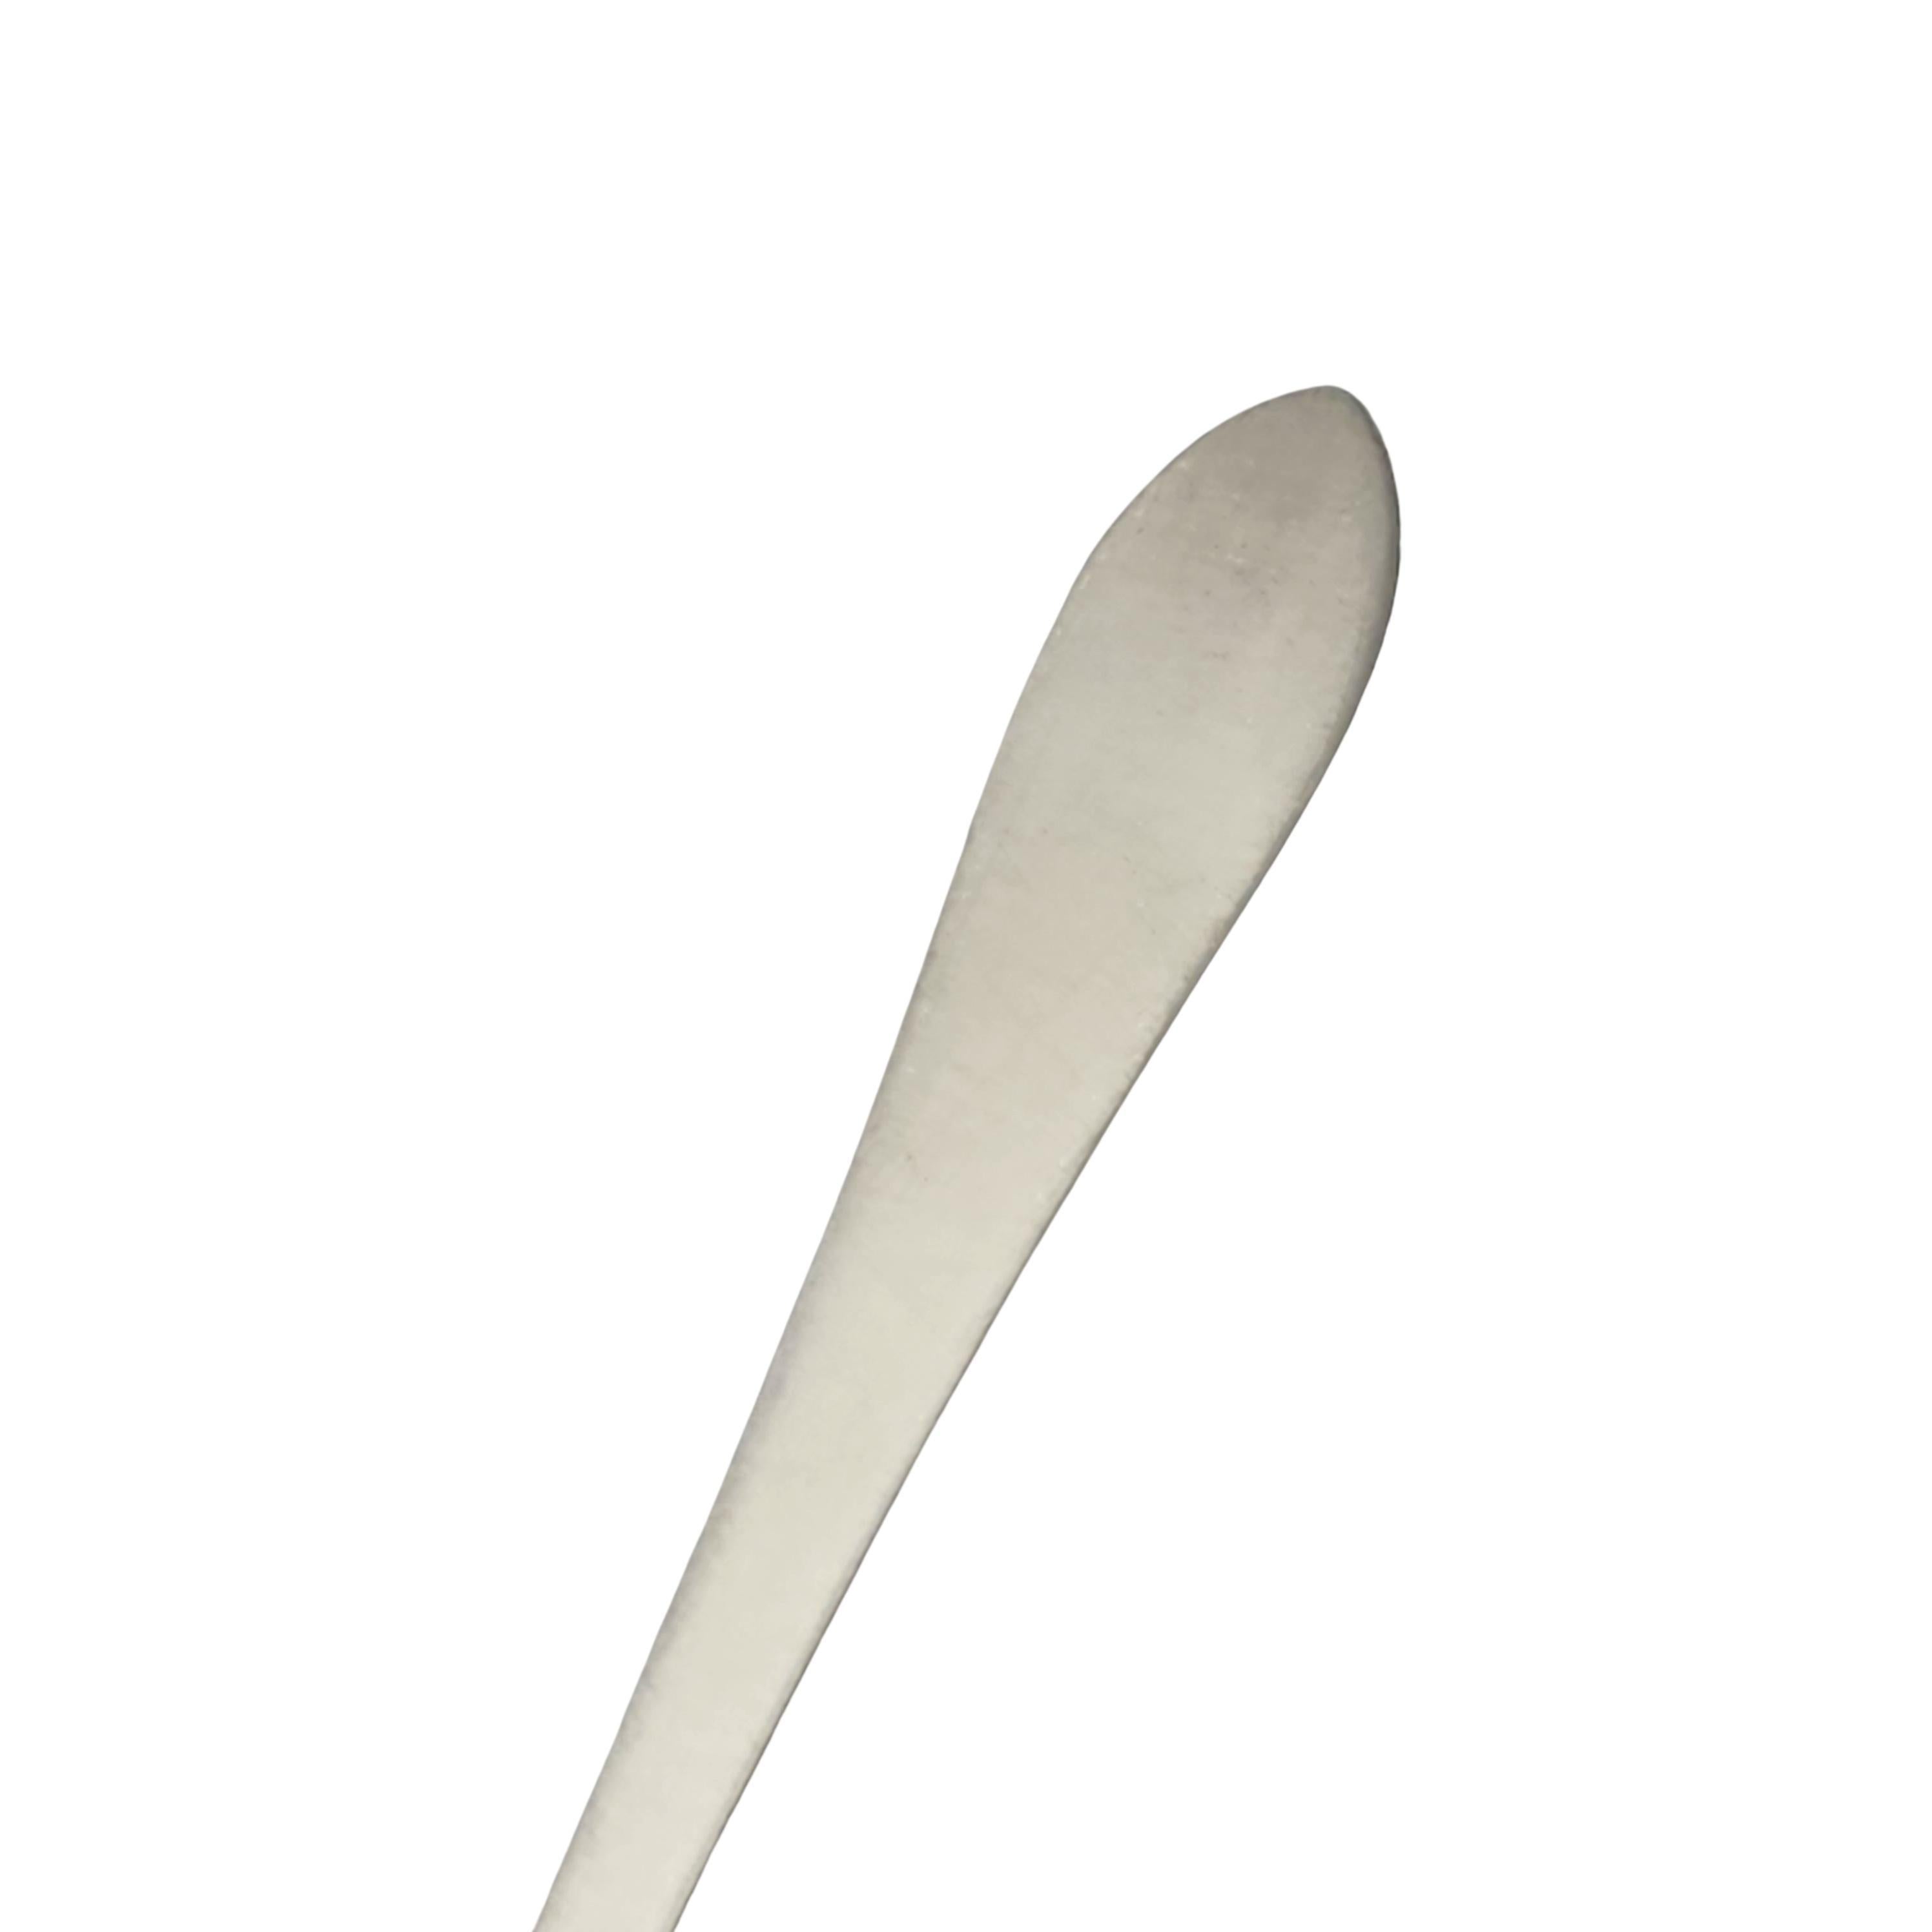 Tiffany & Co Faneuil Sterling Silver Baby Feeding Spoon #15490 4